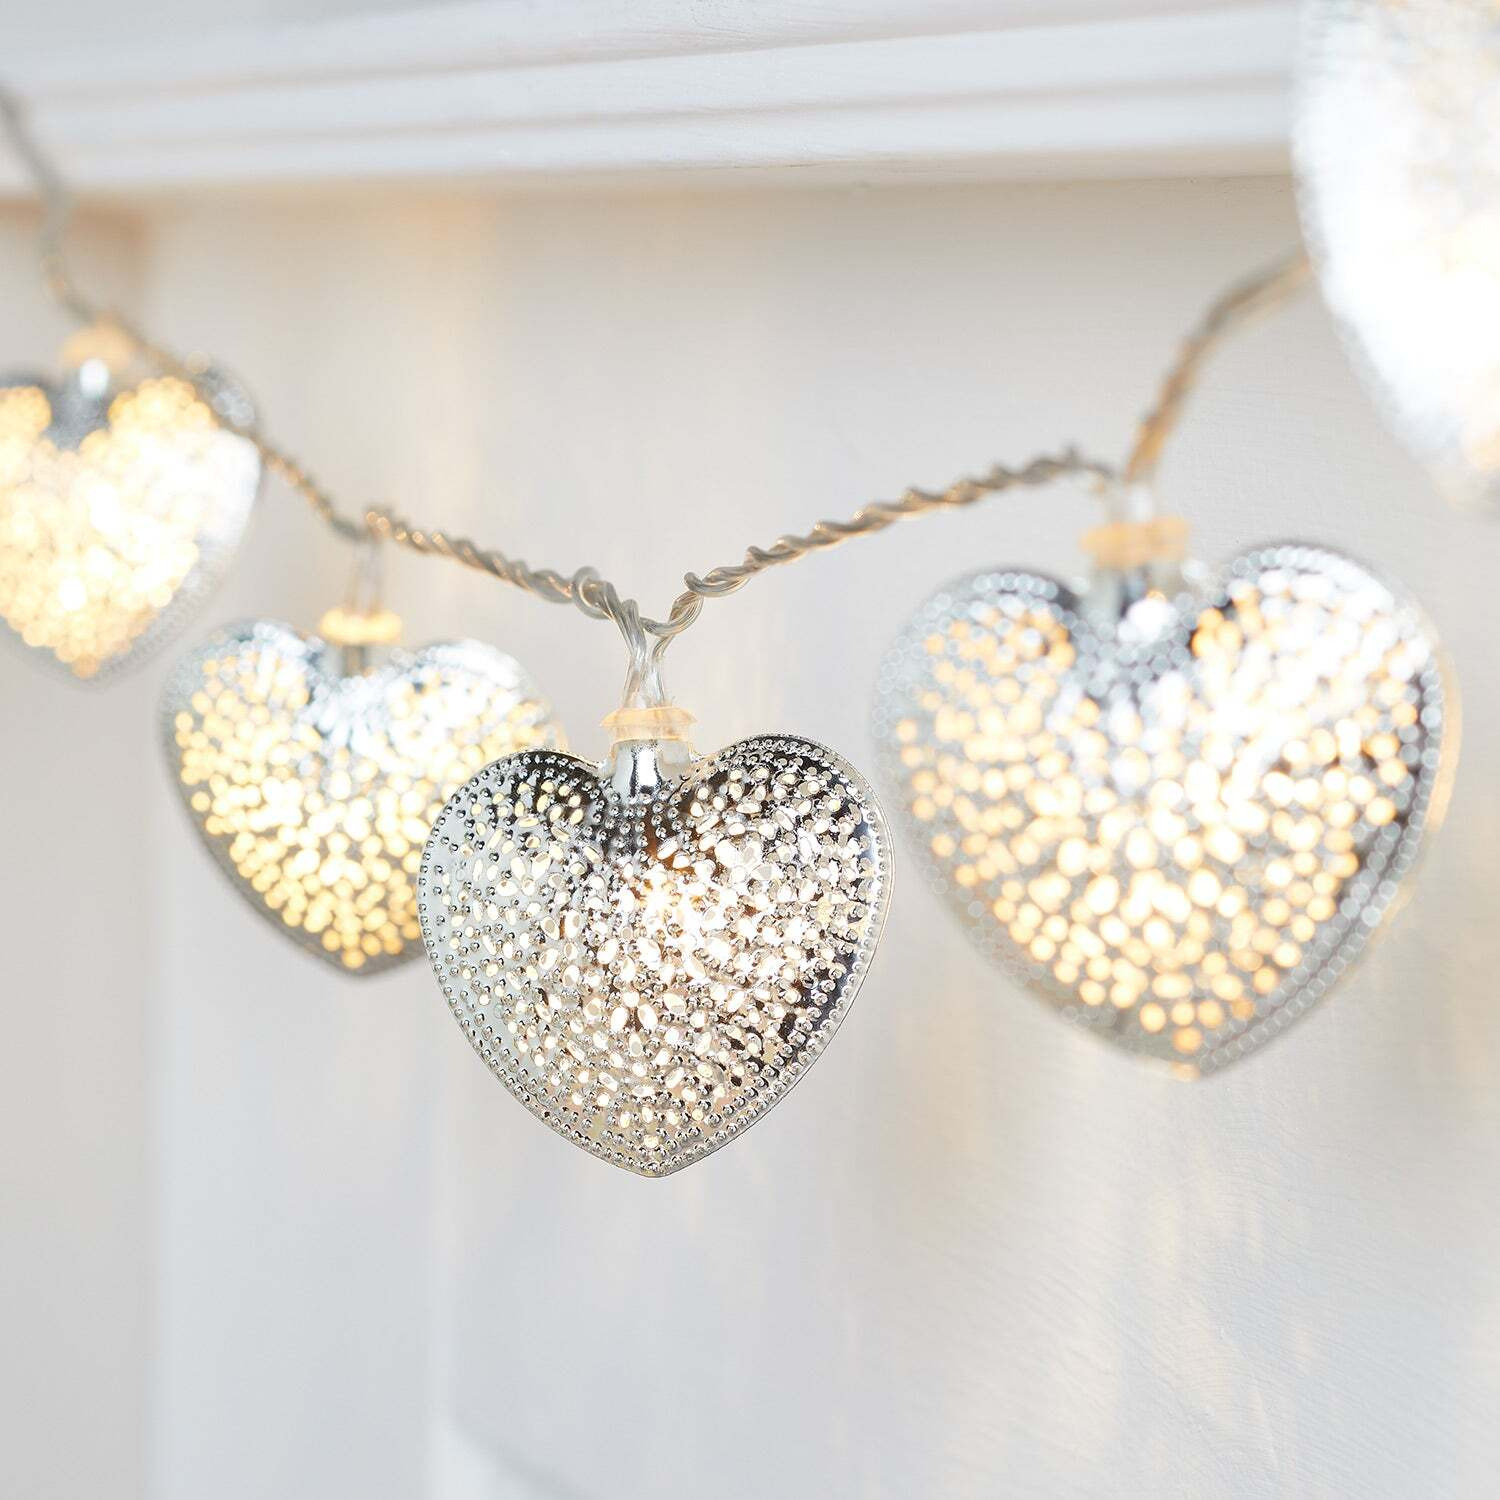 20 Silver Filigree Heart Fairy Lights - image 1